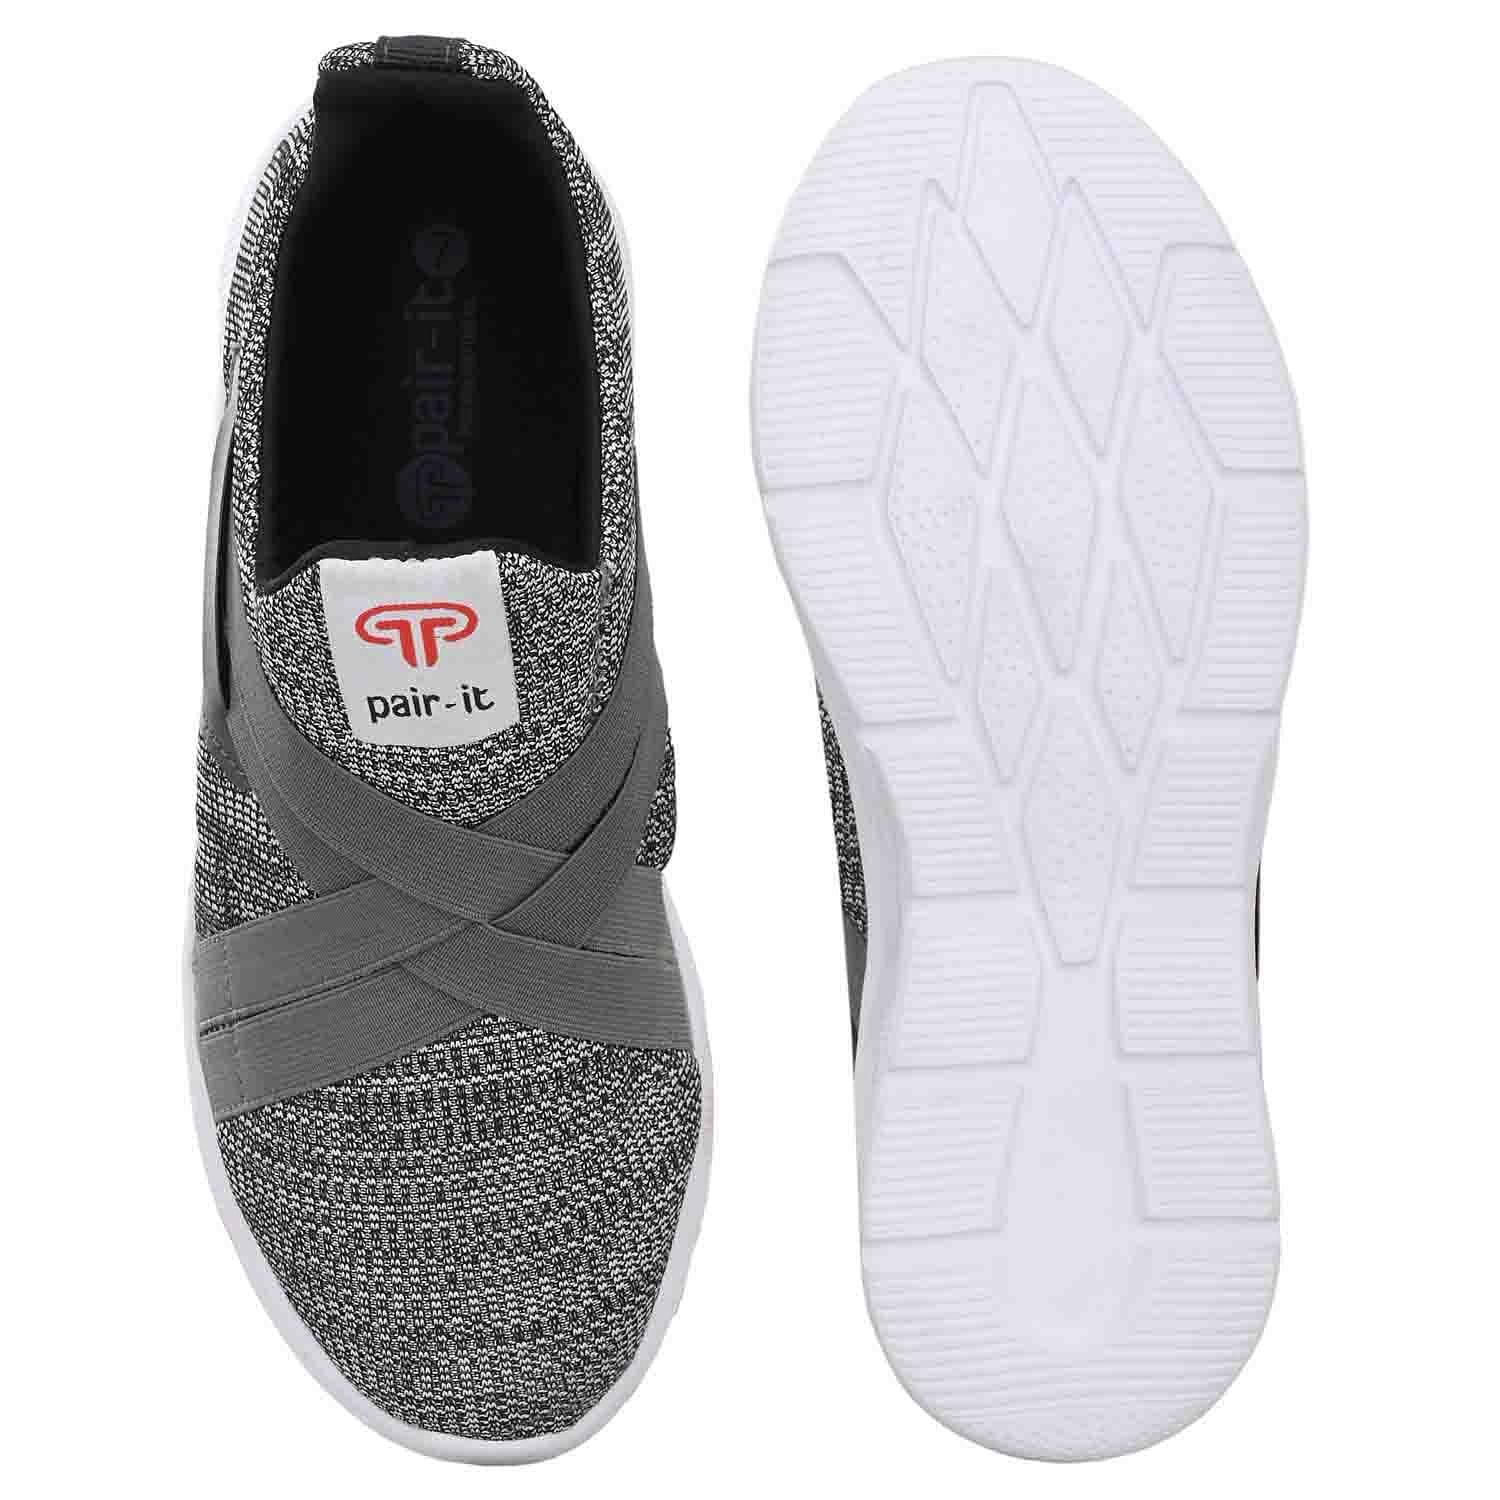 Pair-it Men's Sports Shoes-LZ-Presto-114-Grey